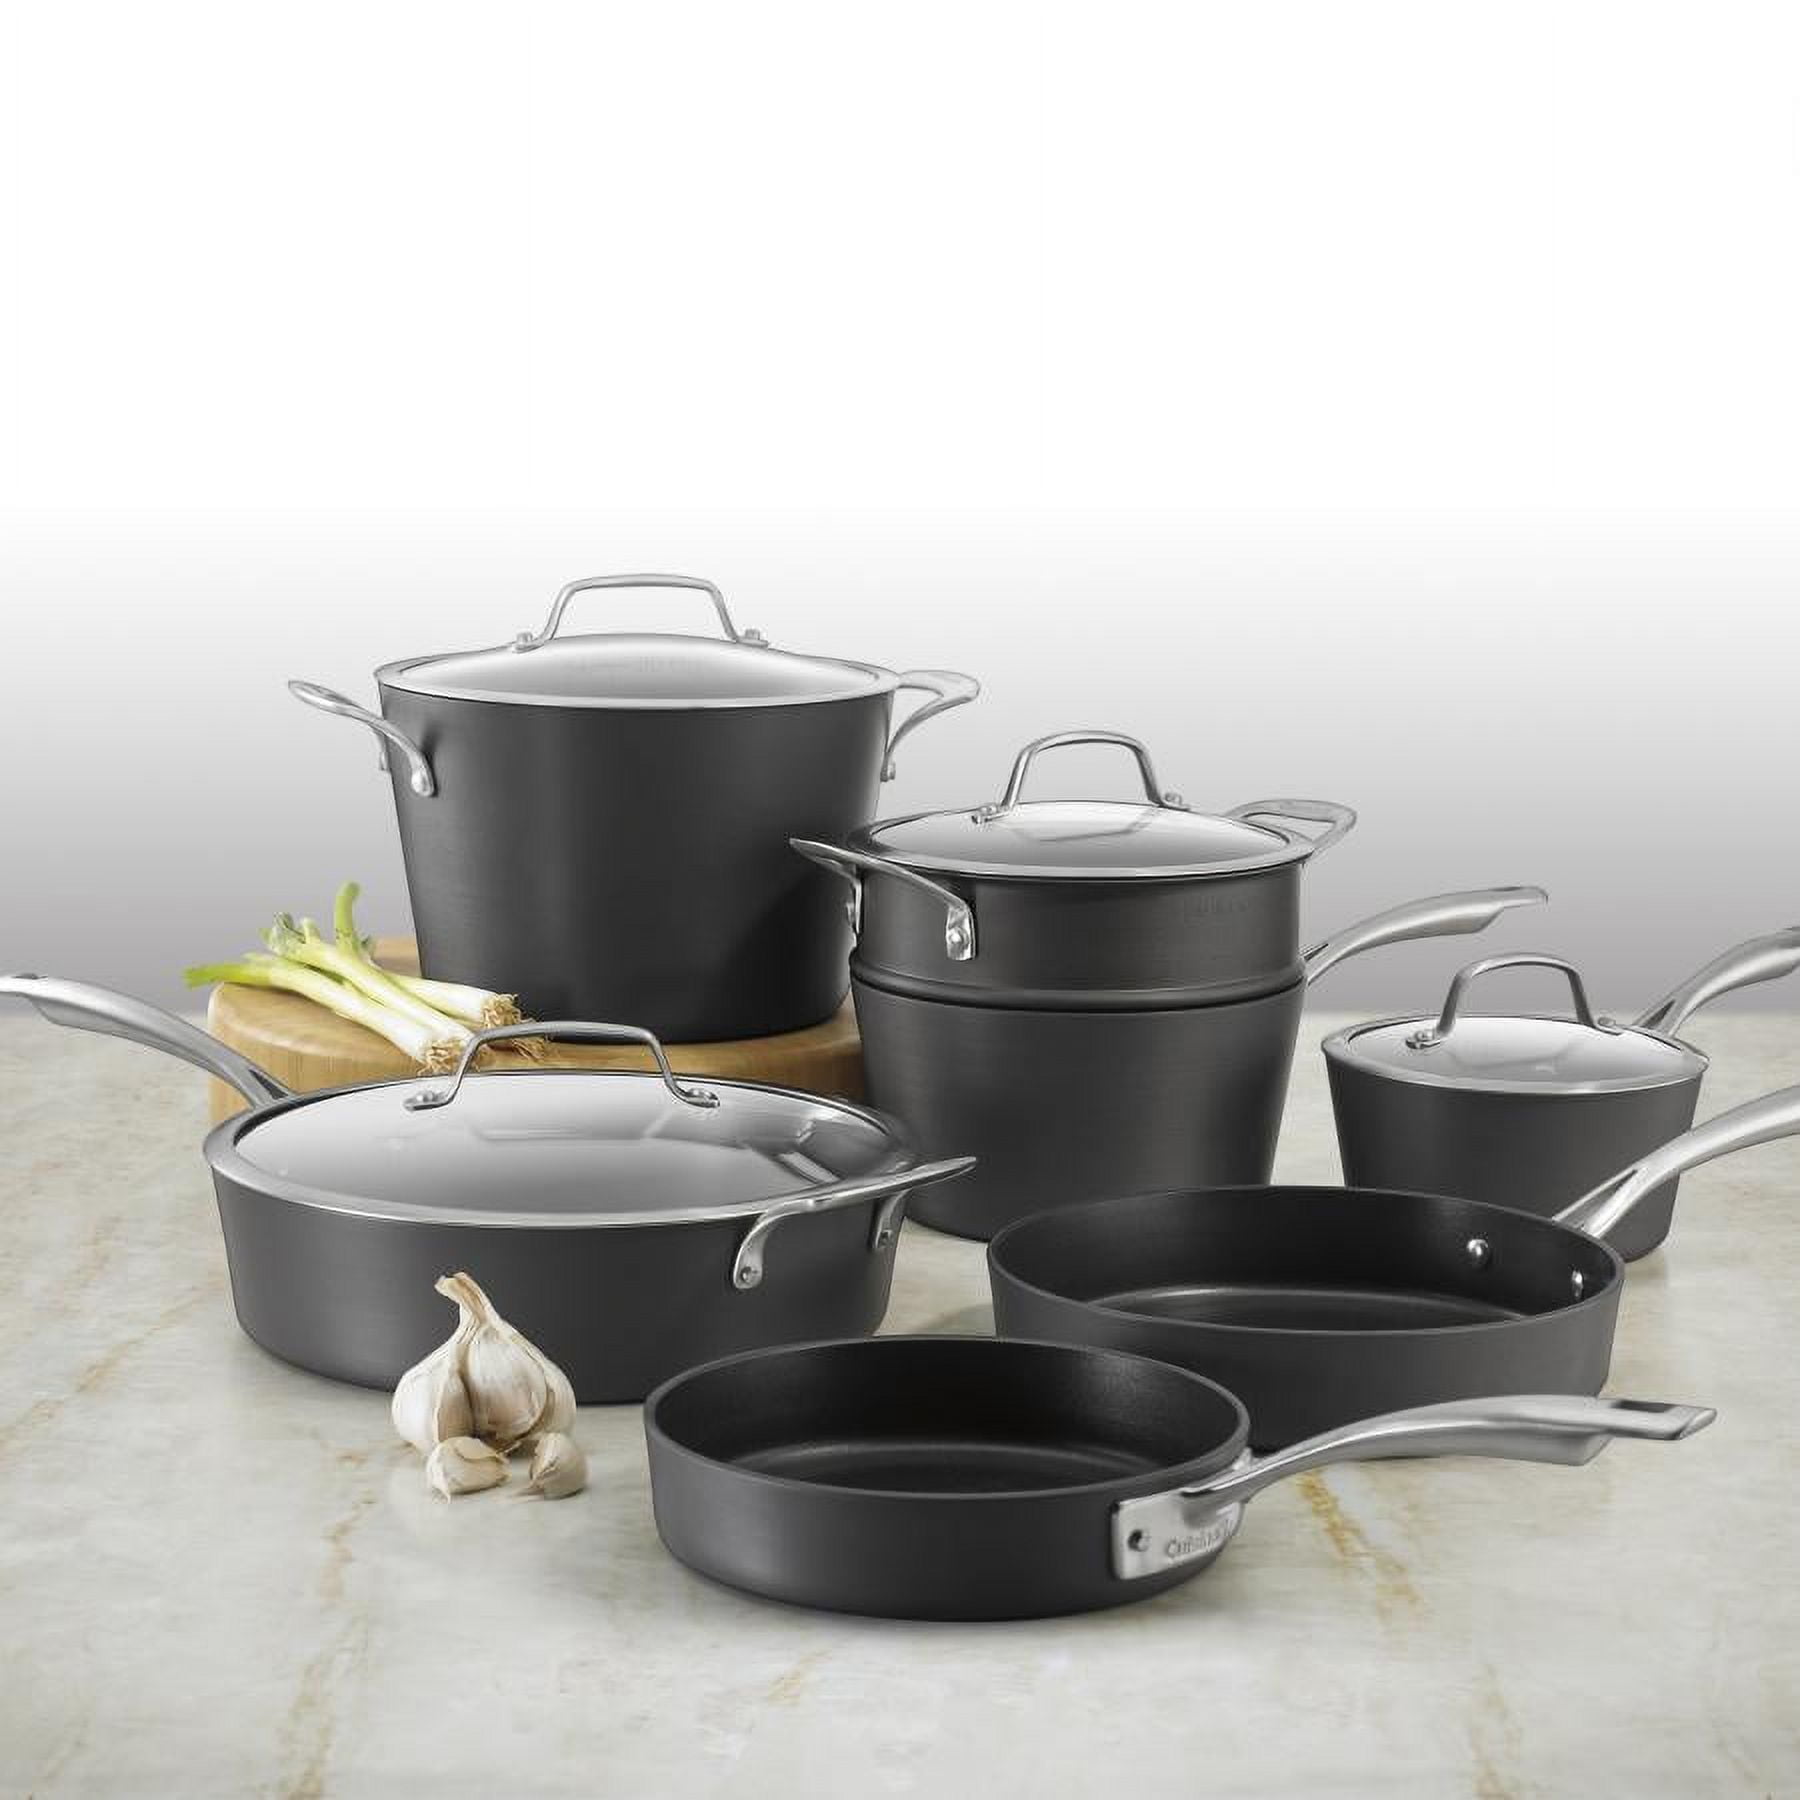  Cuisinart 11-Piece Cookware Set, Black, Chef's Classic Nonstick  Hard Anodized, 66-11: Home & Kitchen